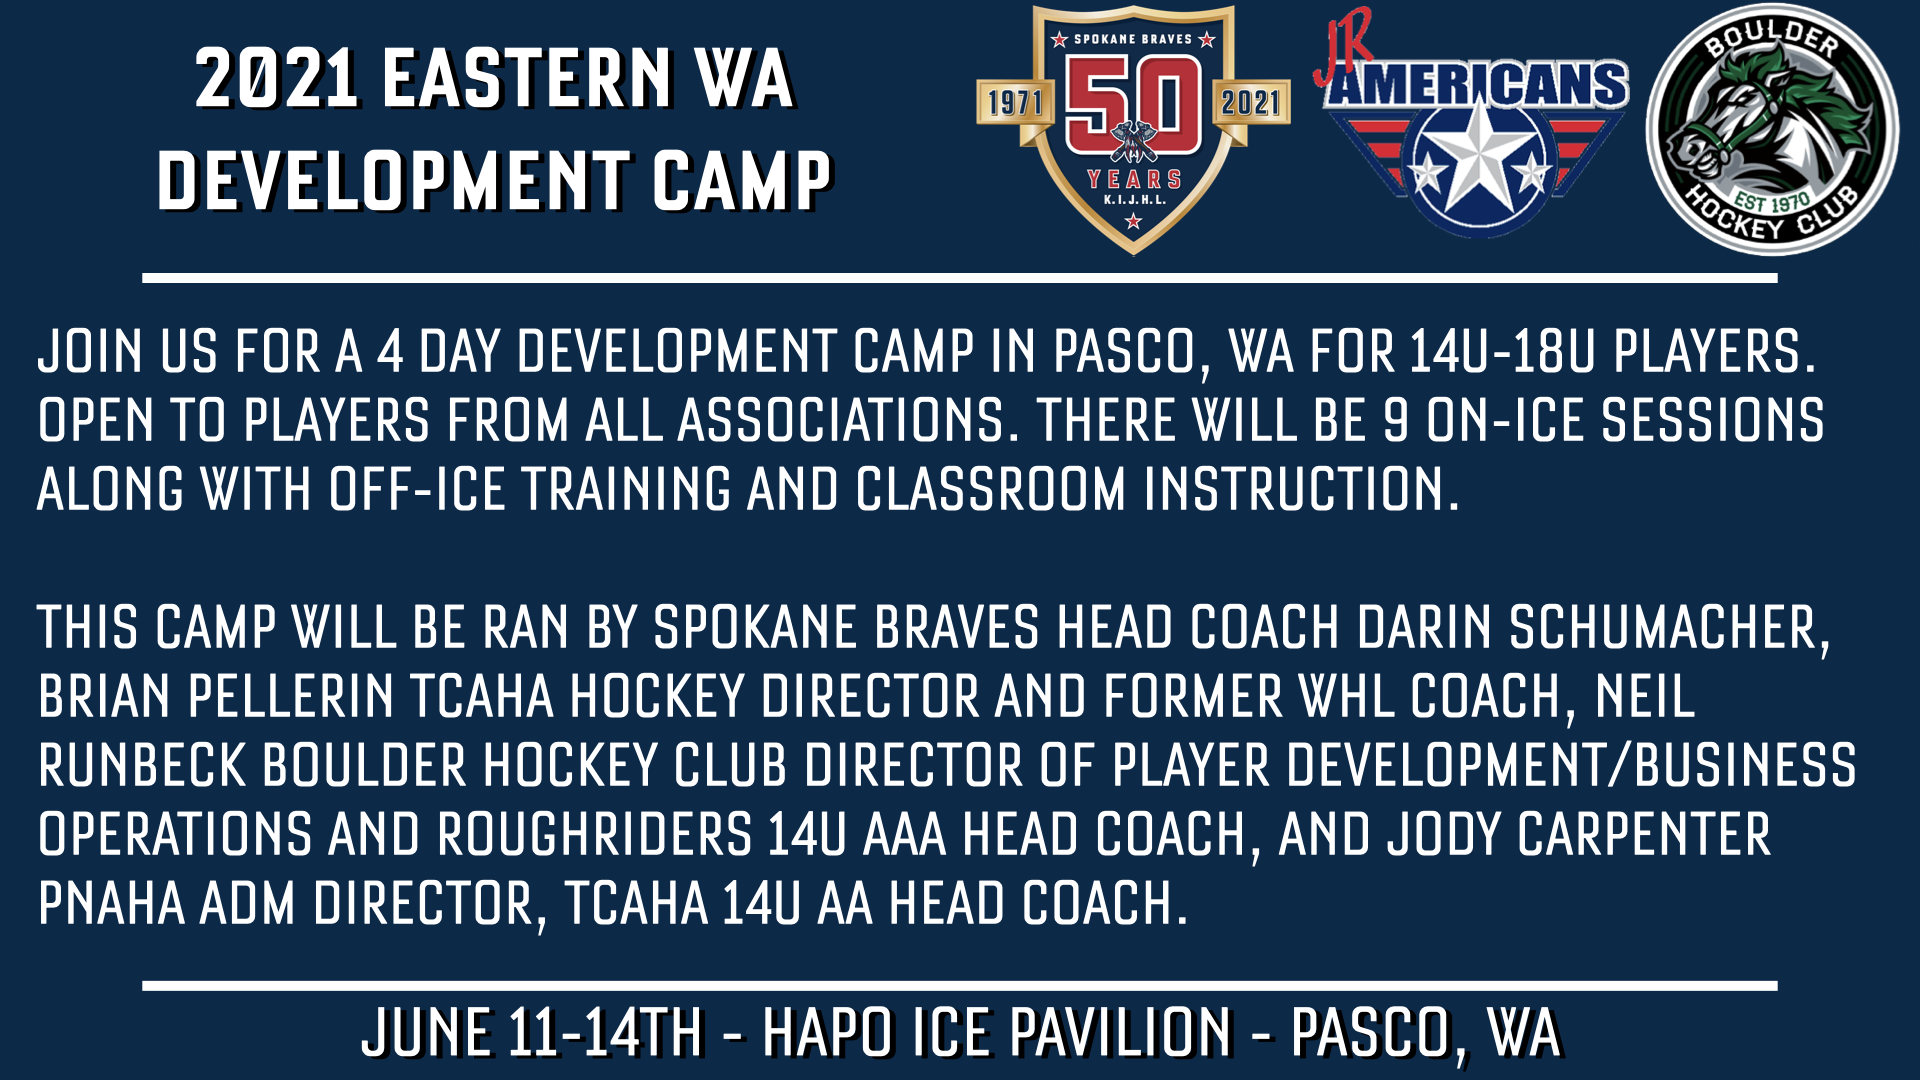 Eastern Washington Development Camp June 11-14, Pasco, WA